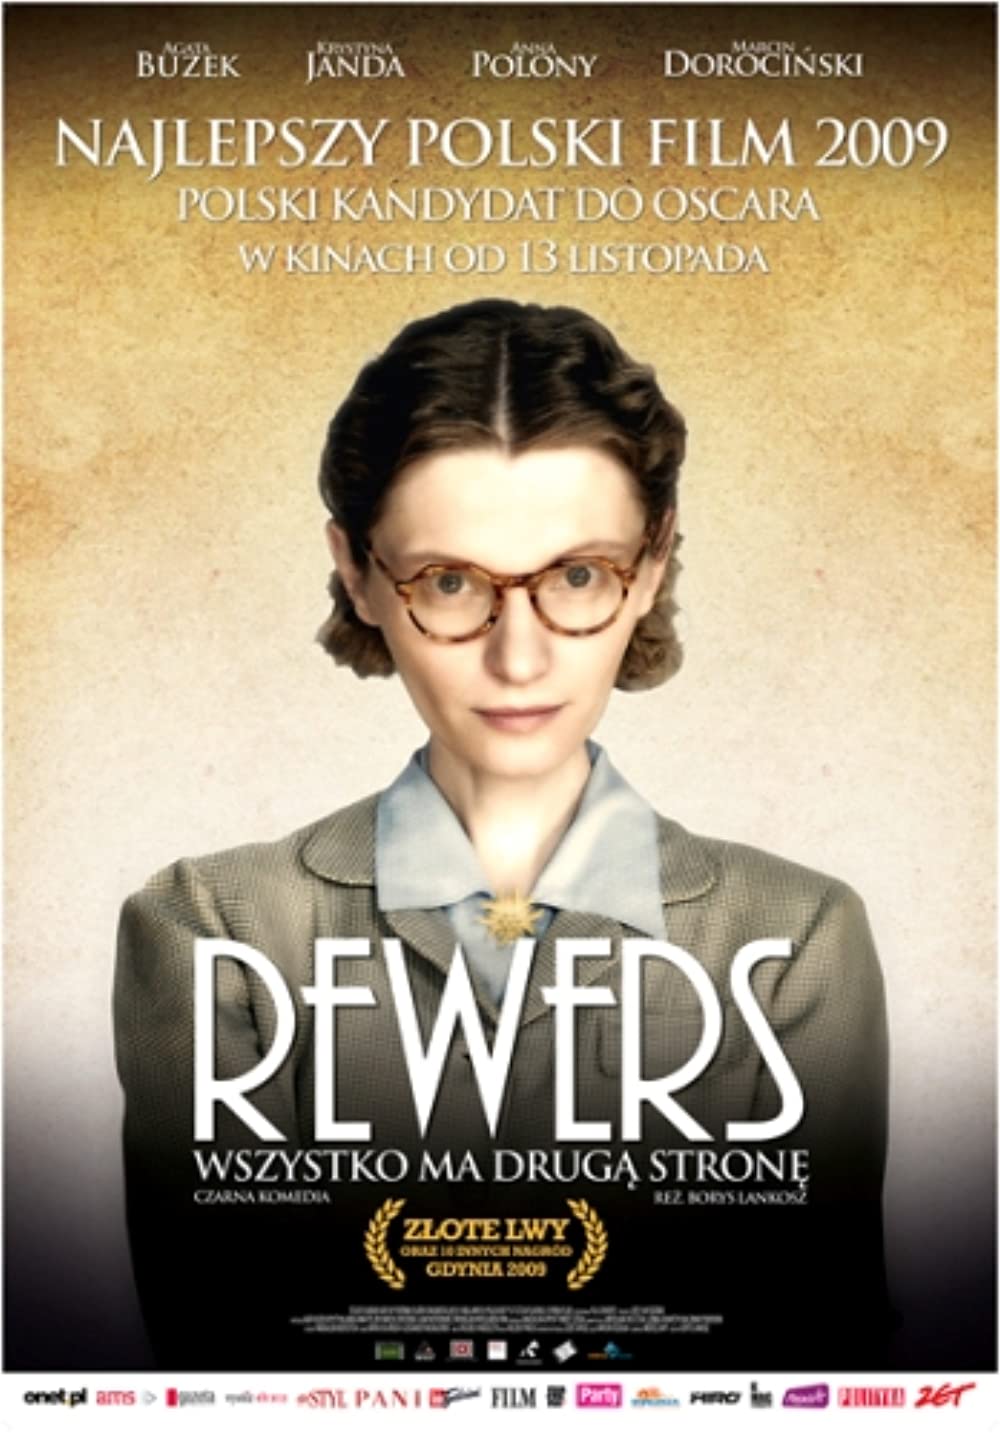 Rewers Movie Download - Rewers